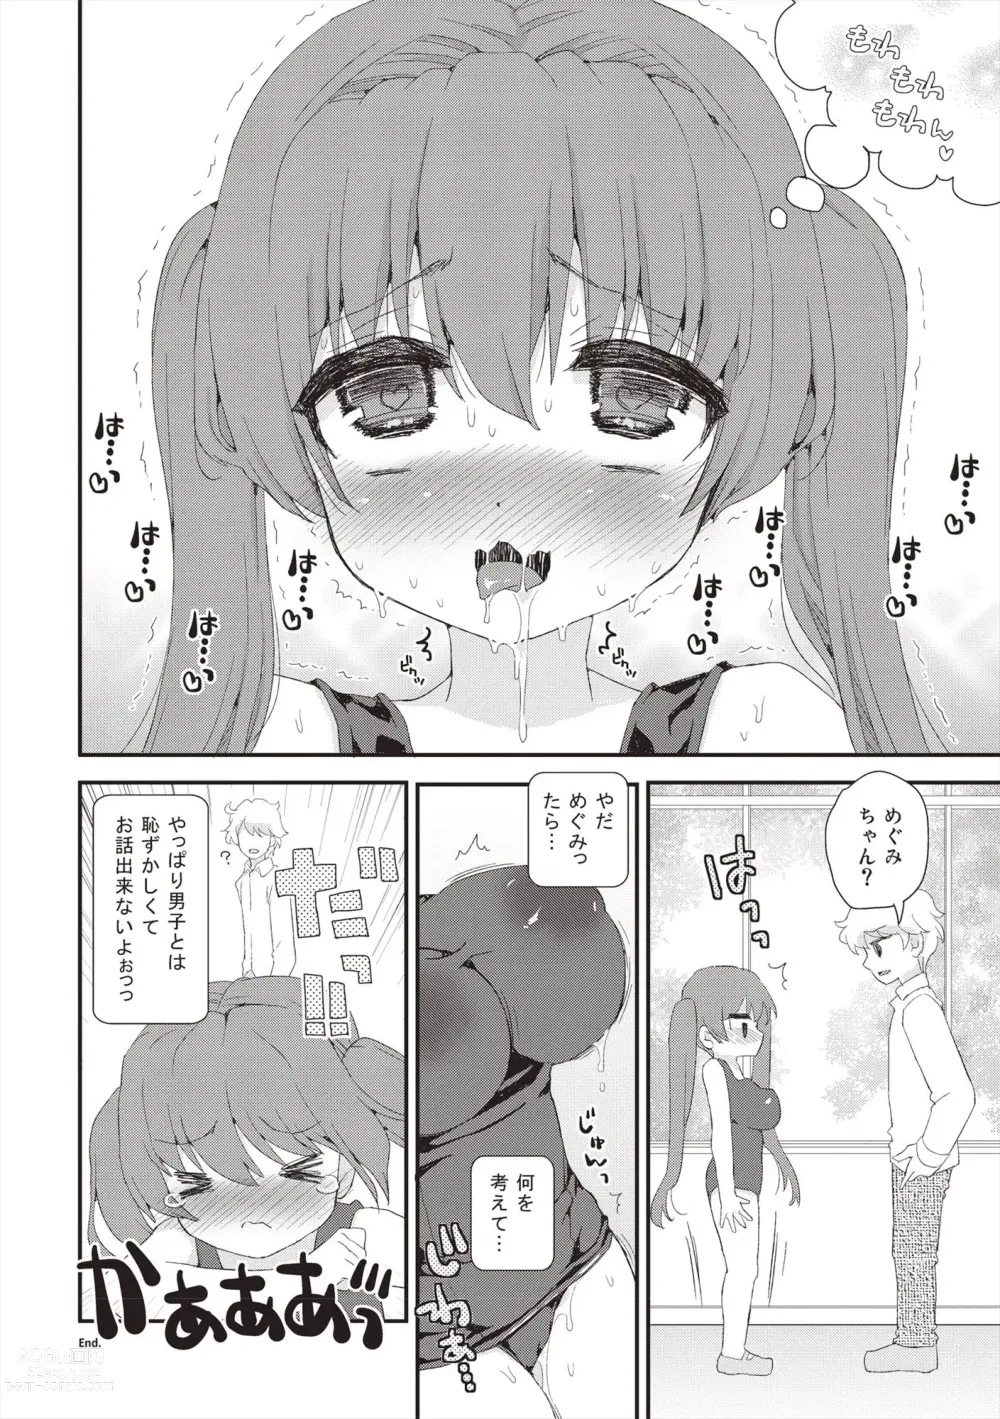 Page 219 of manga Paizuri Android Loli Kyonyuu Shojo Soushitsu Hen